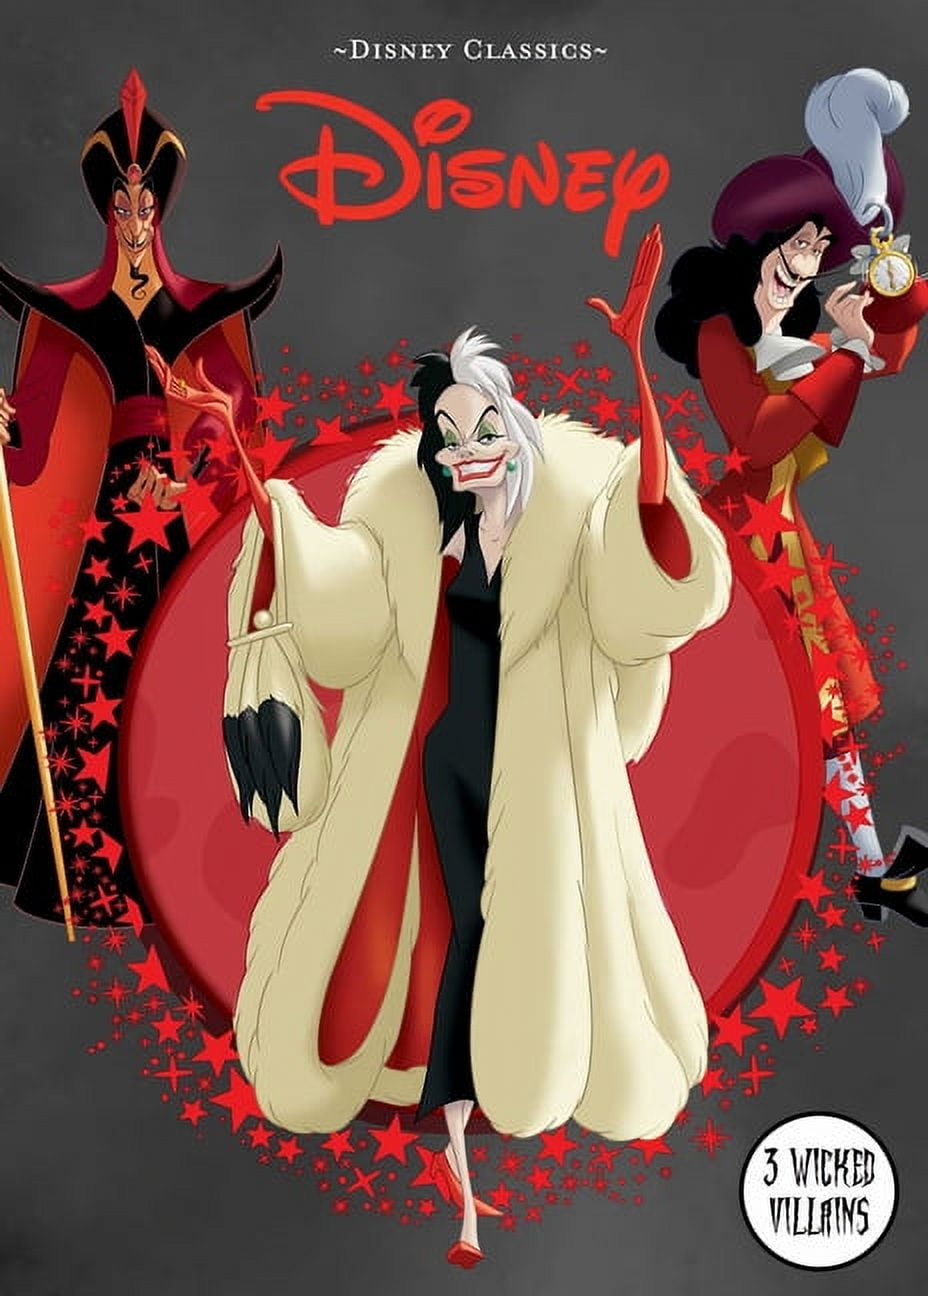 Disney Die-Cut Classics: Disney Classics: 3 Wicked Villains (Hardcover) 